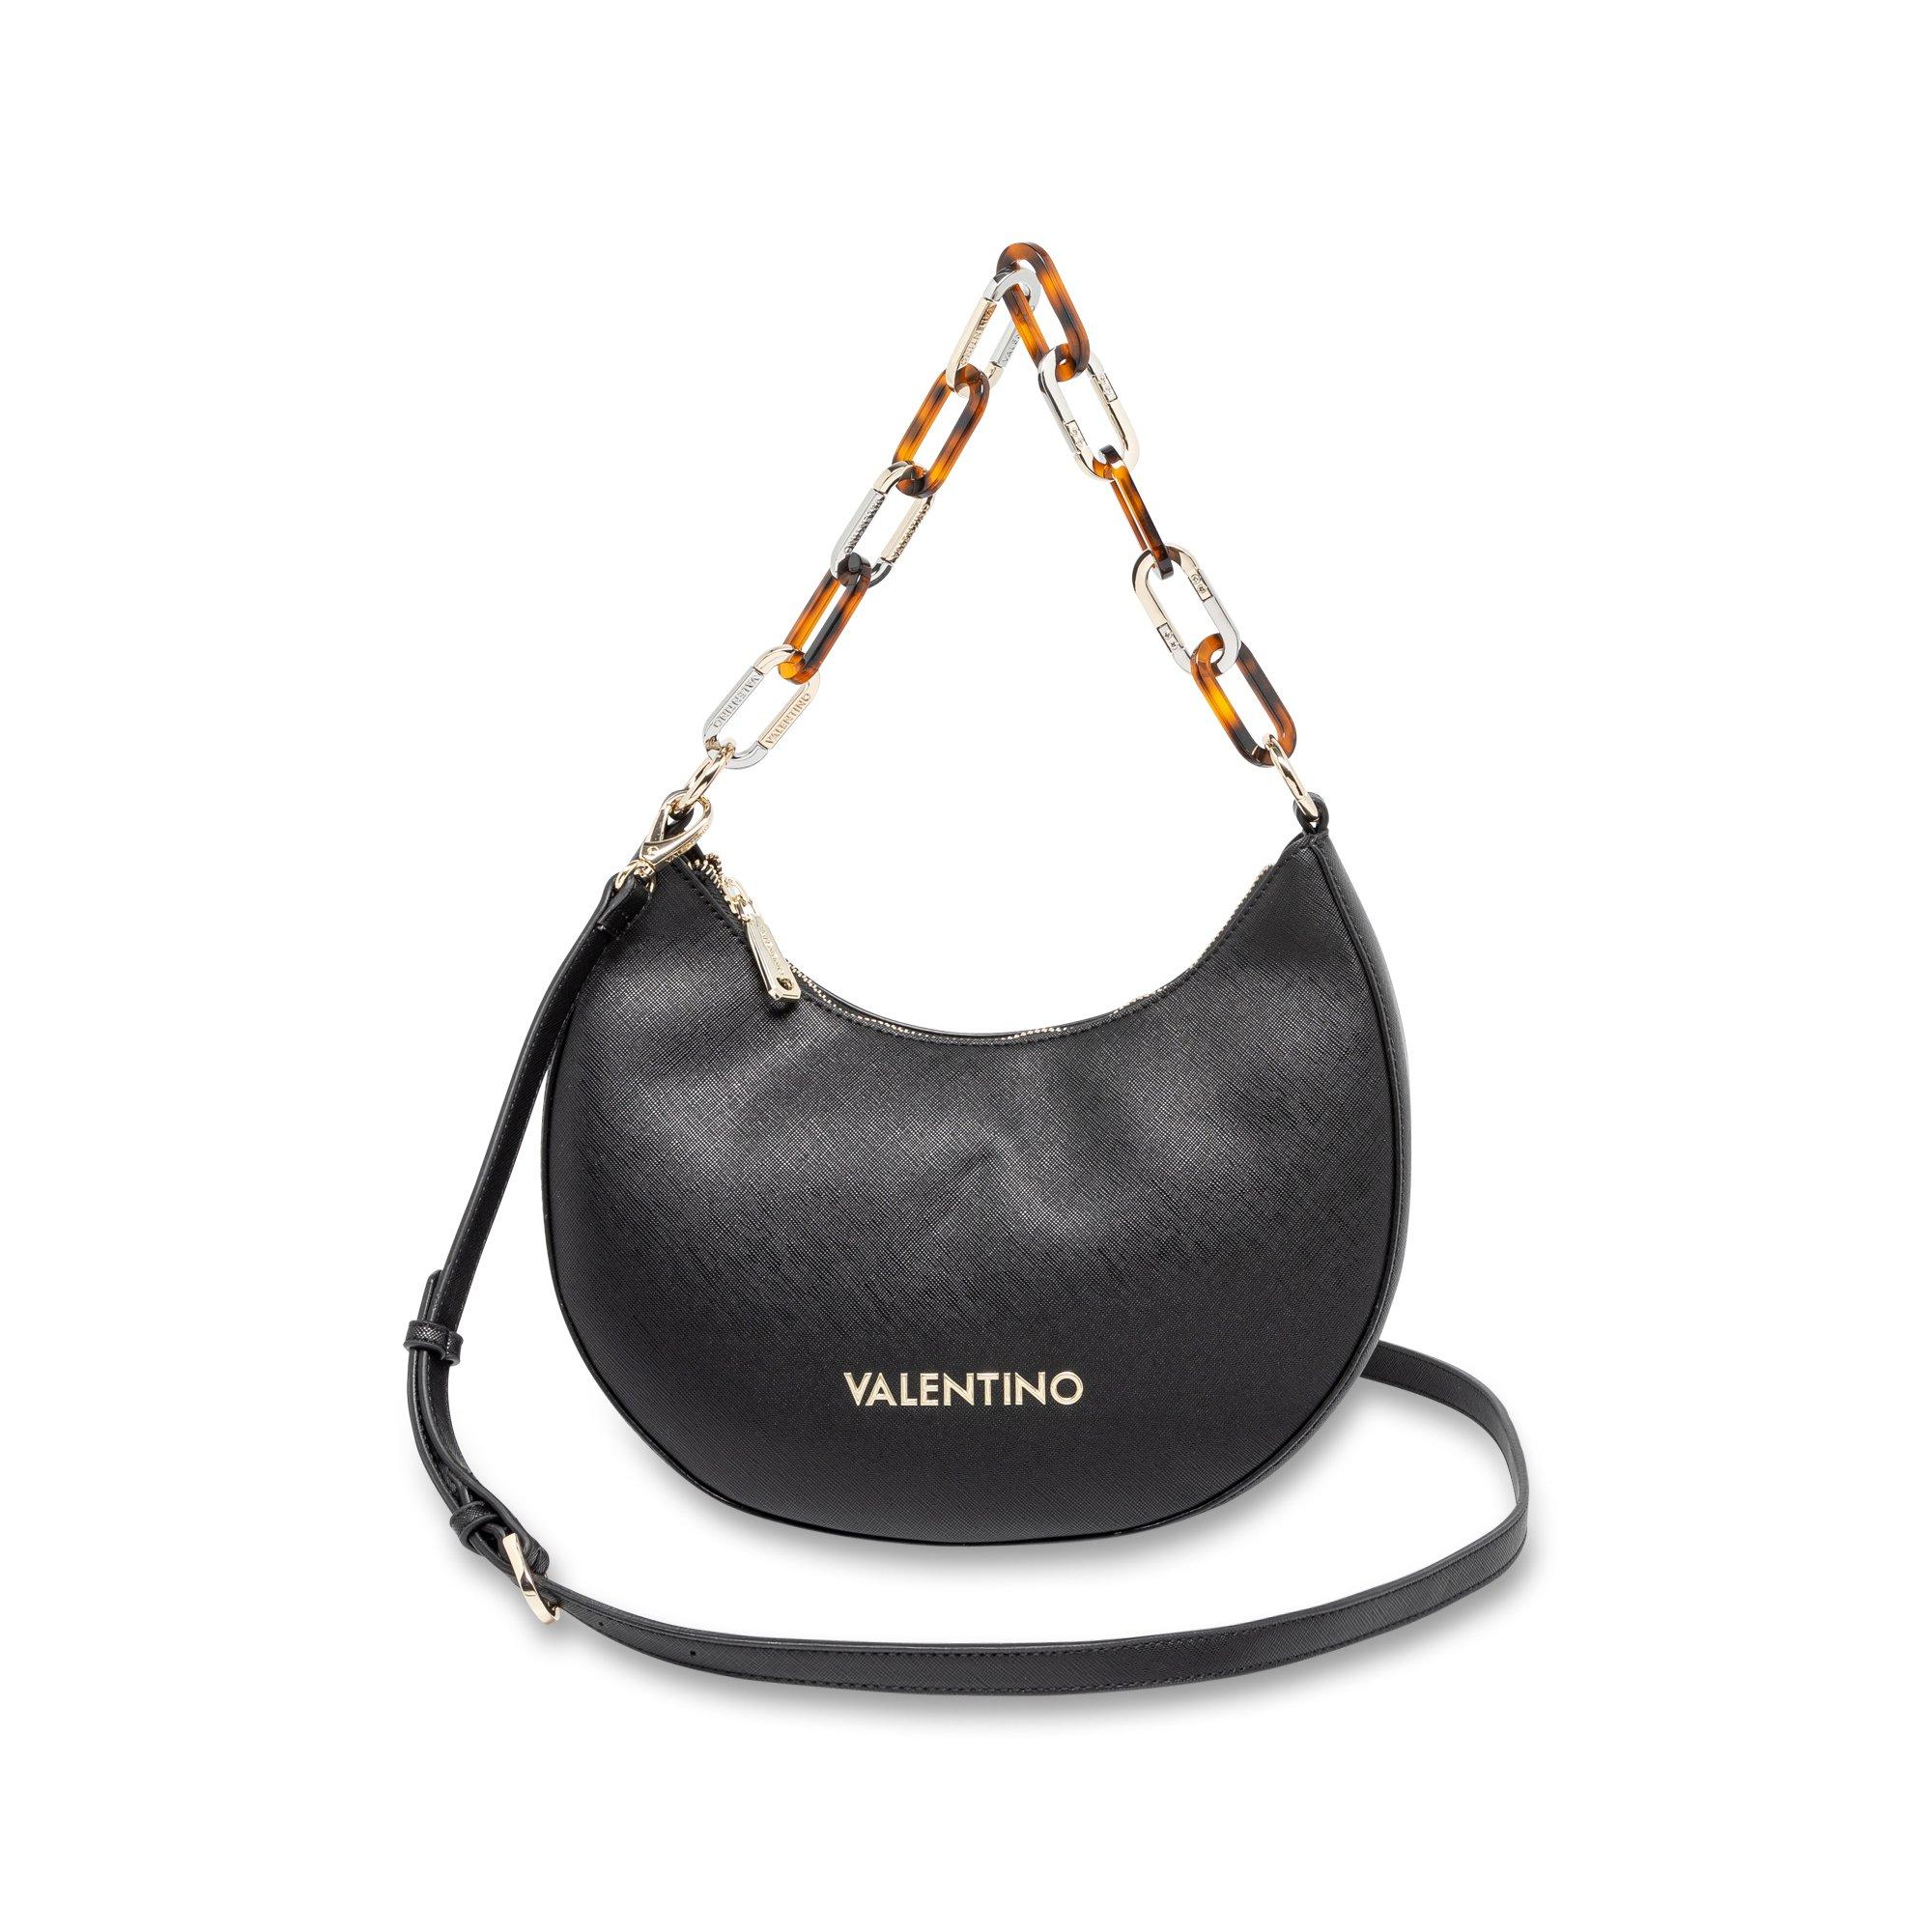 Valentino Handbags Bercy Sac hobo 